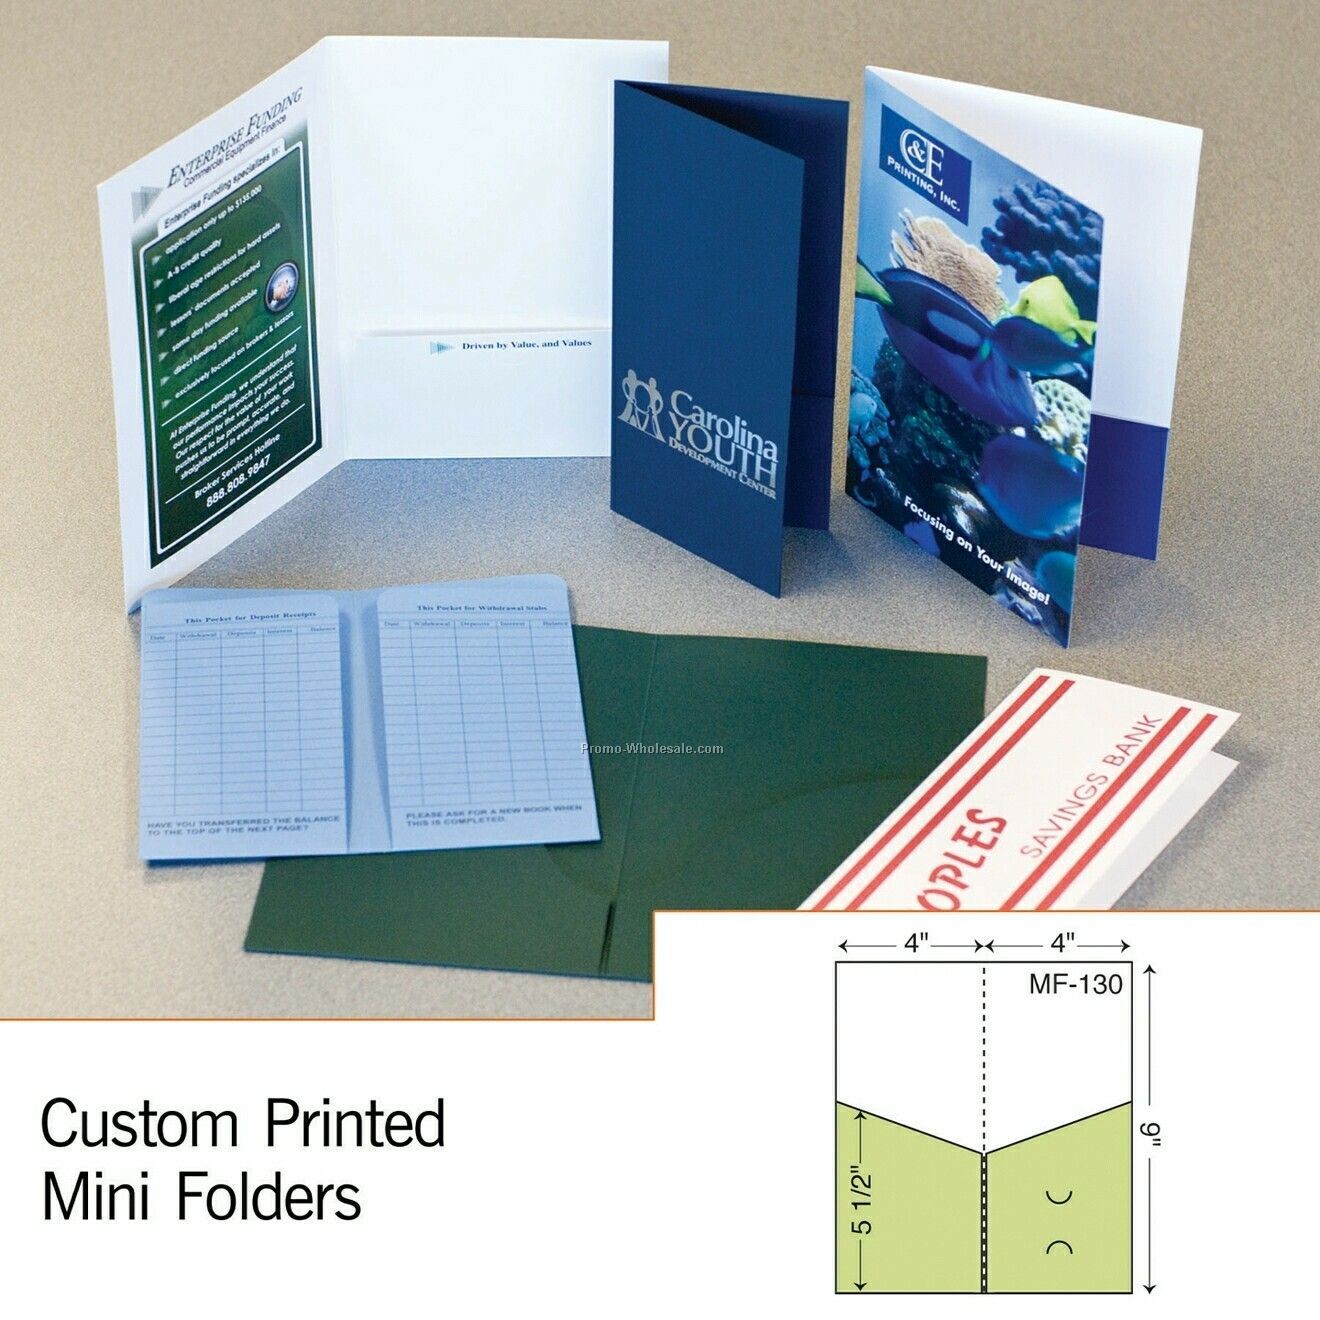 4"x9" Mini Folder W/ Double Pocket (4 Color Process)